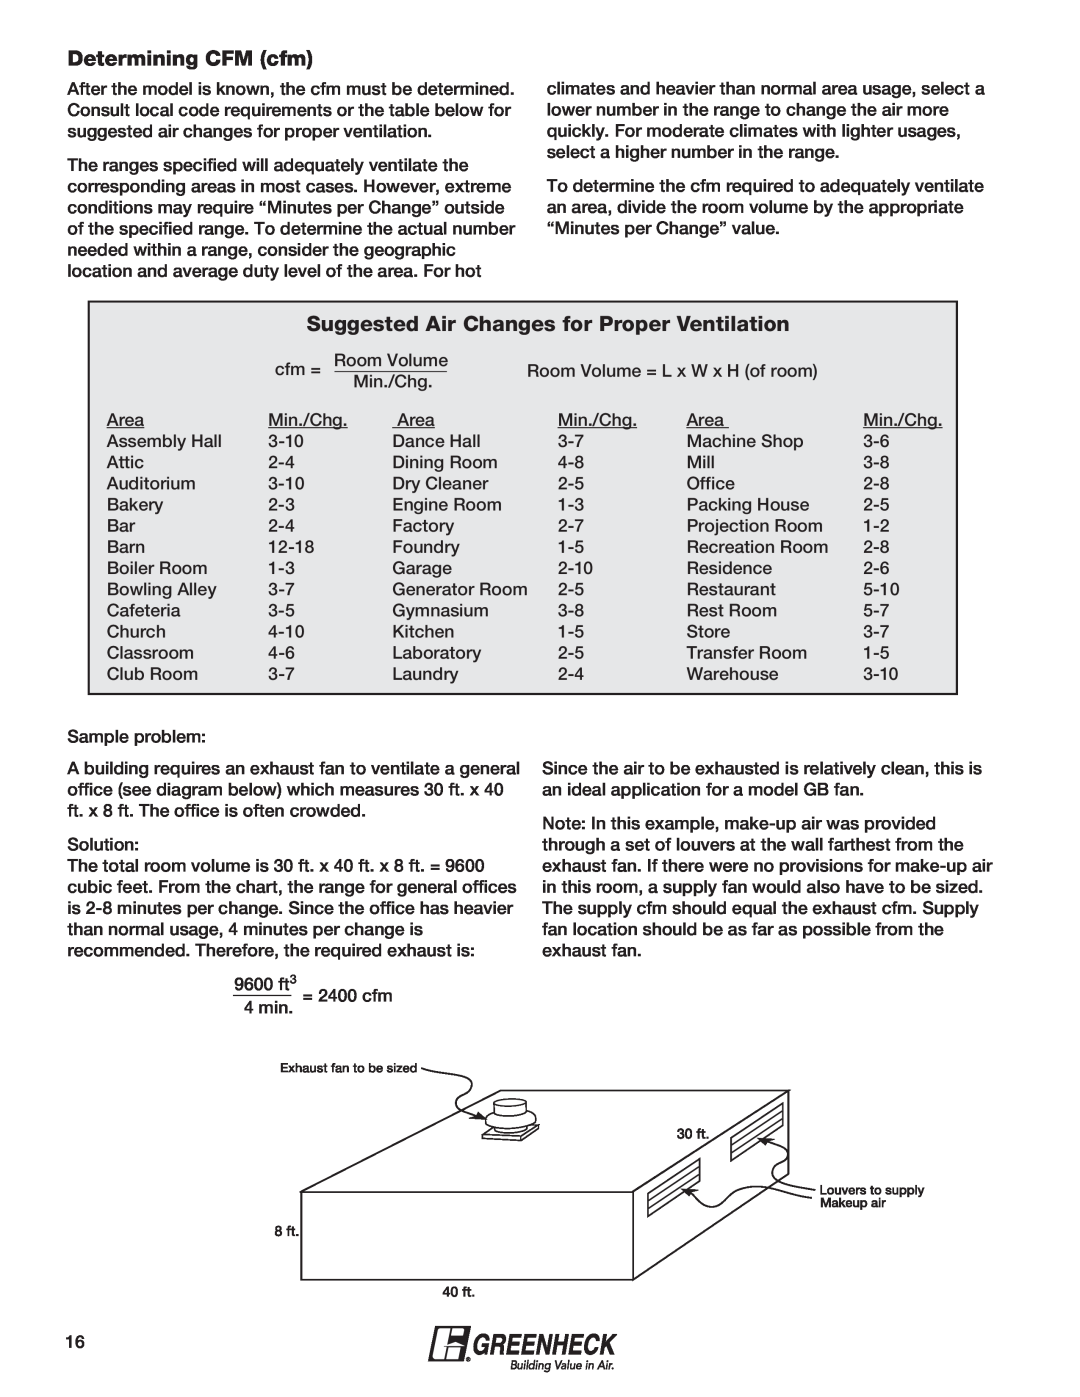 Greenheck Fan 240XP-CUb manual Determining CFM cfm, Suggested Air Changes for Proper Ventilation 